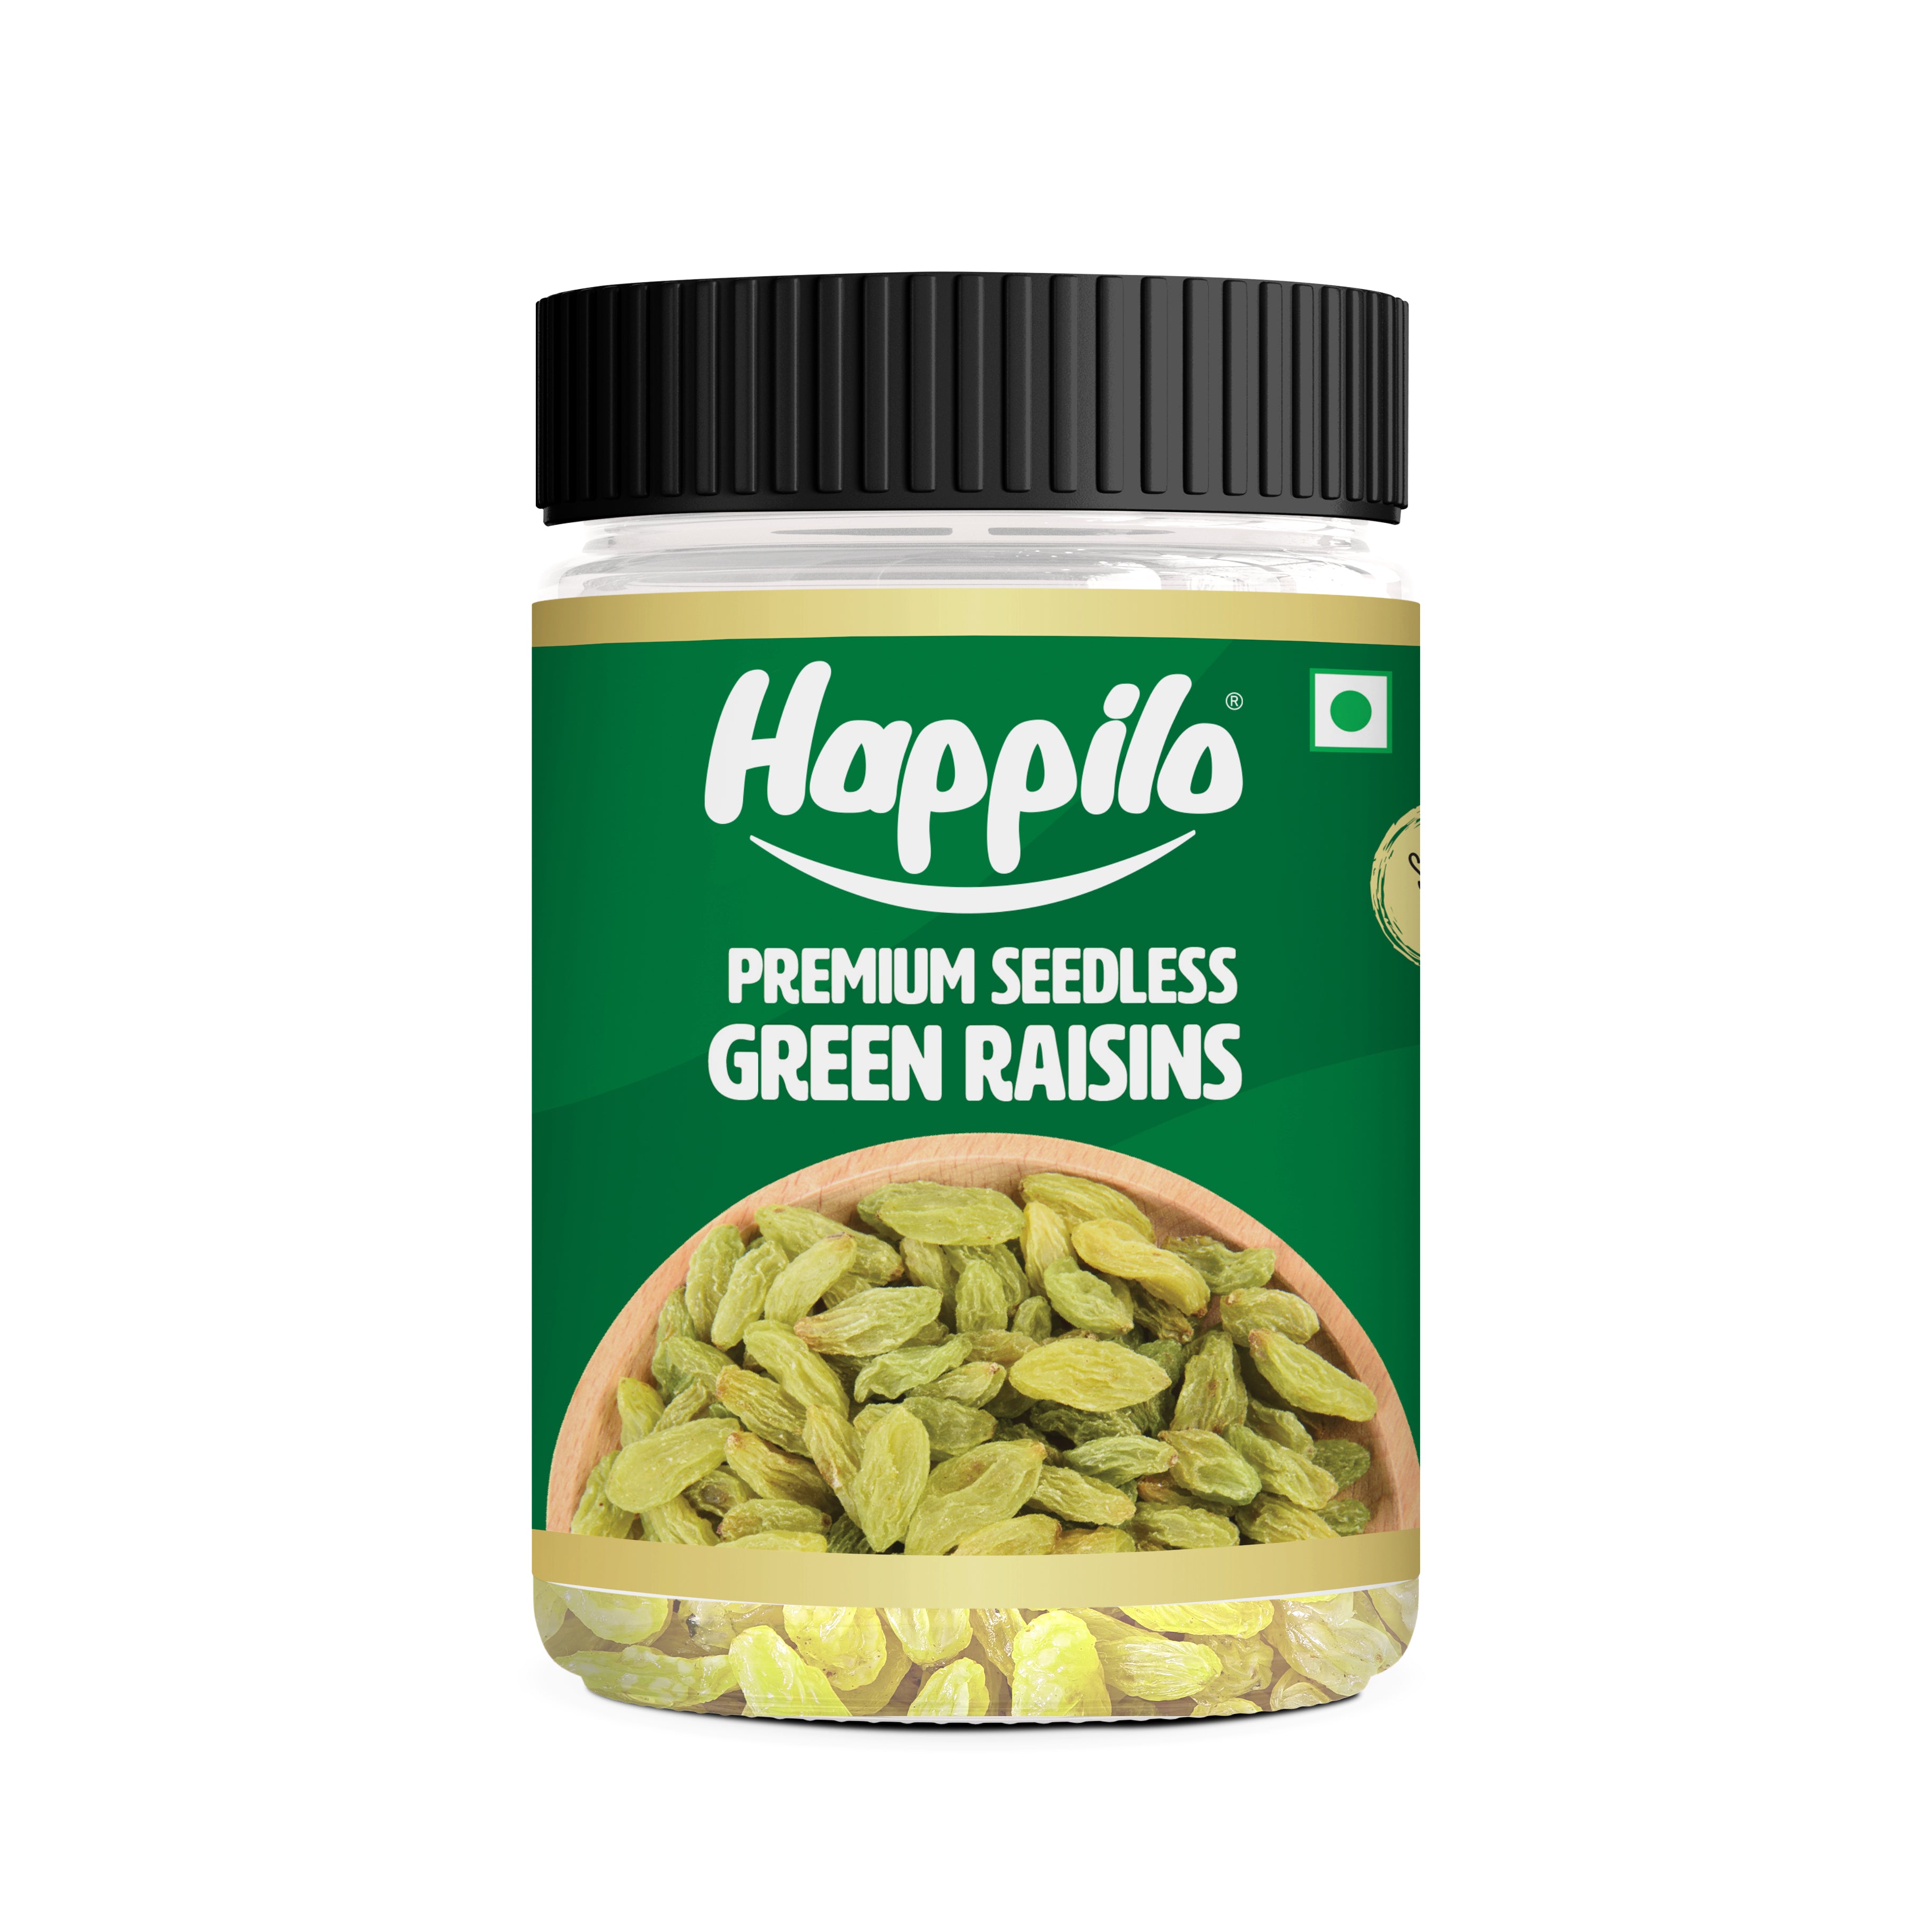 Happilo Premium Seedless Green Raisins 250g Jar